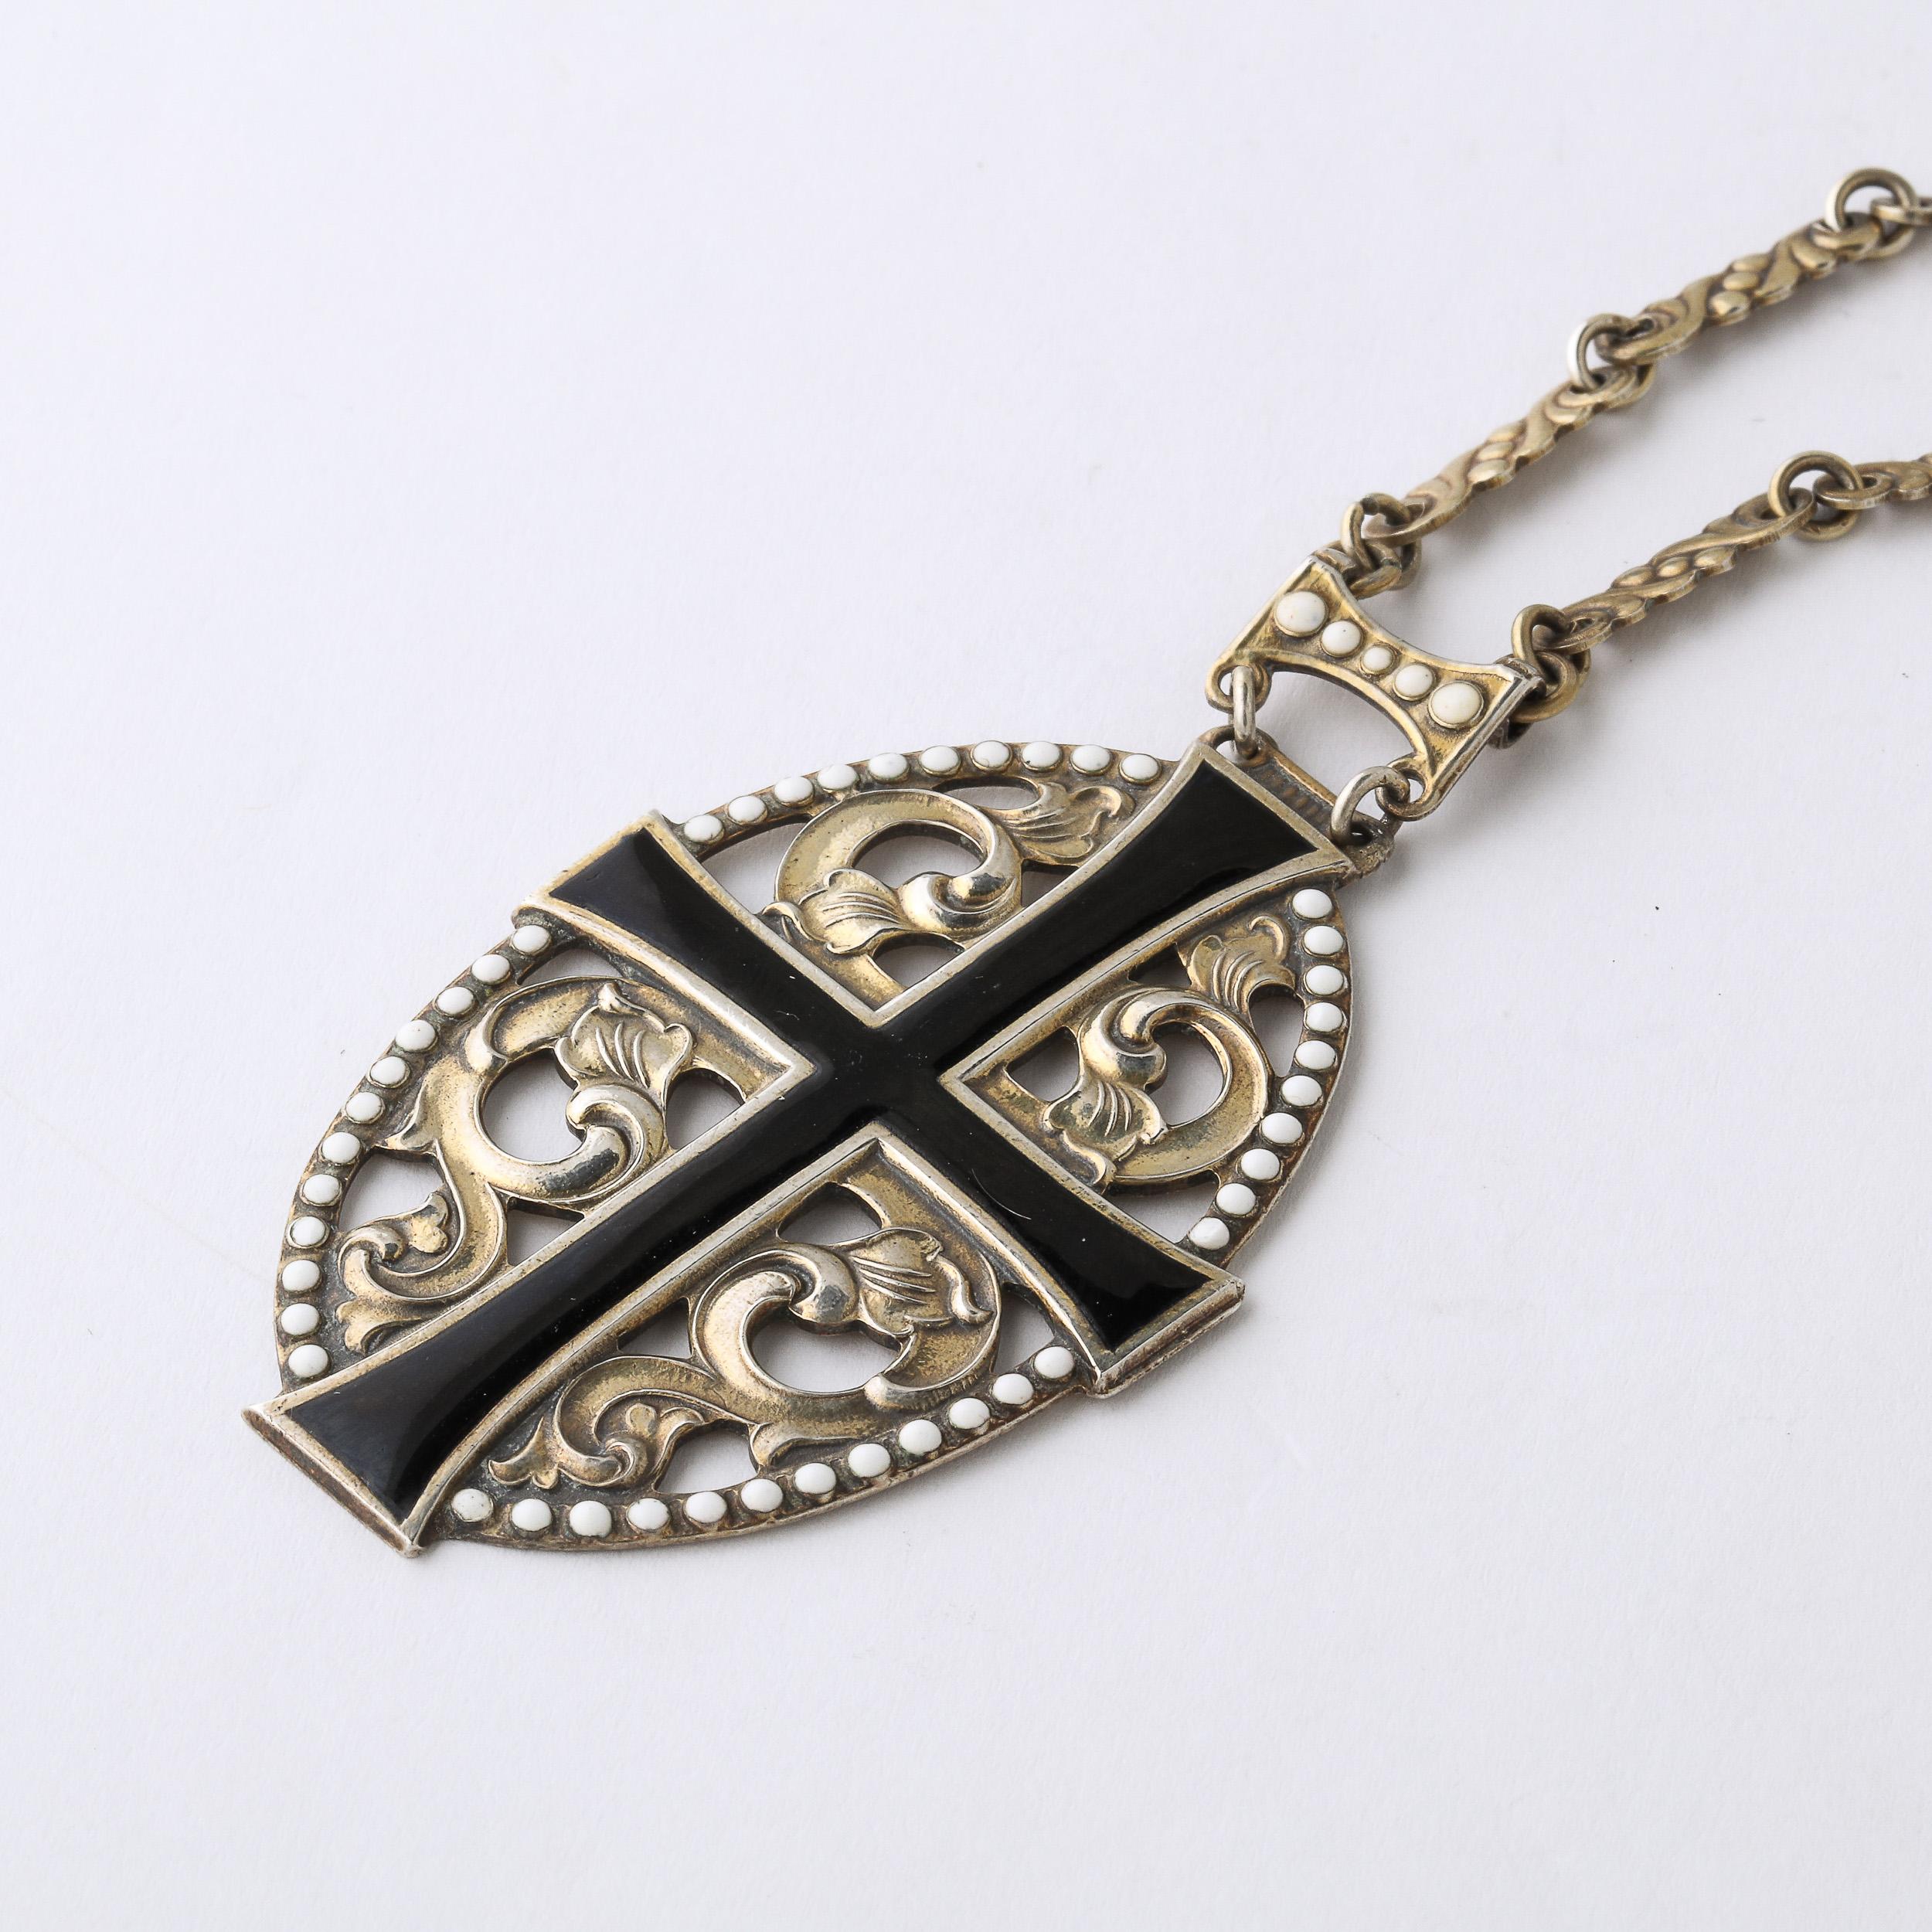 Antique Gilt Silver & Enamel Decorated Openwork Cross Pendant Necklace For Sale 5